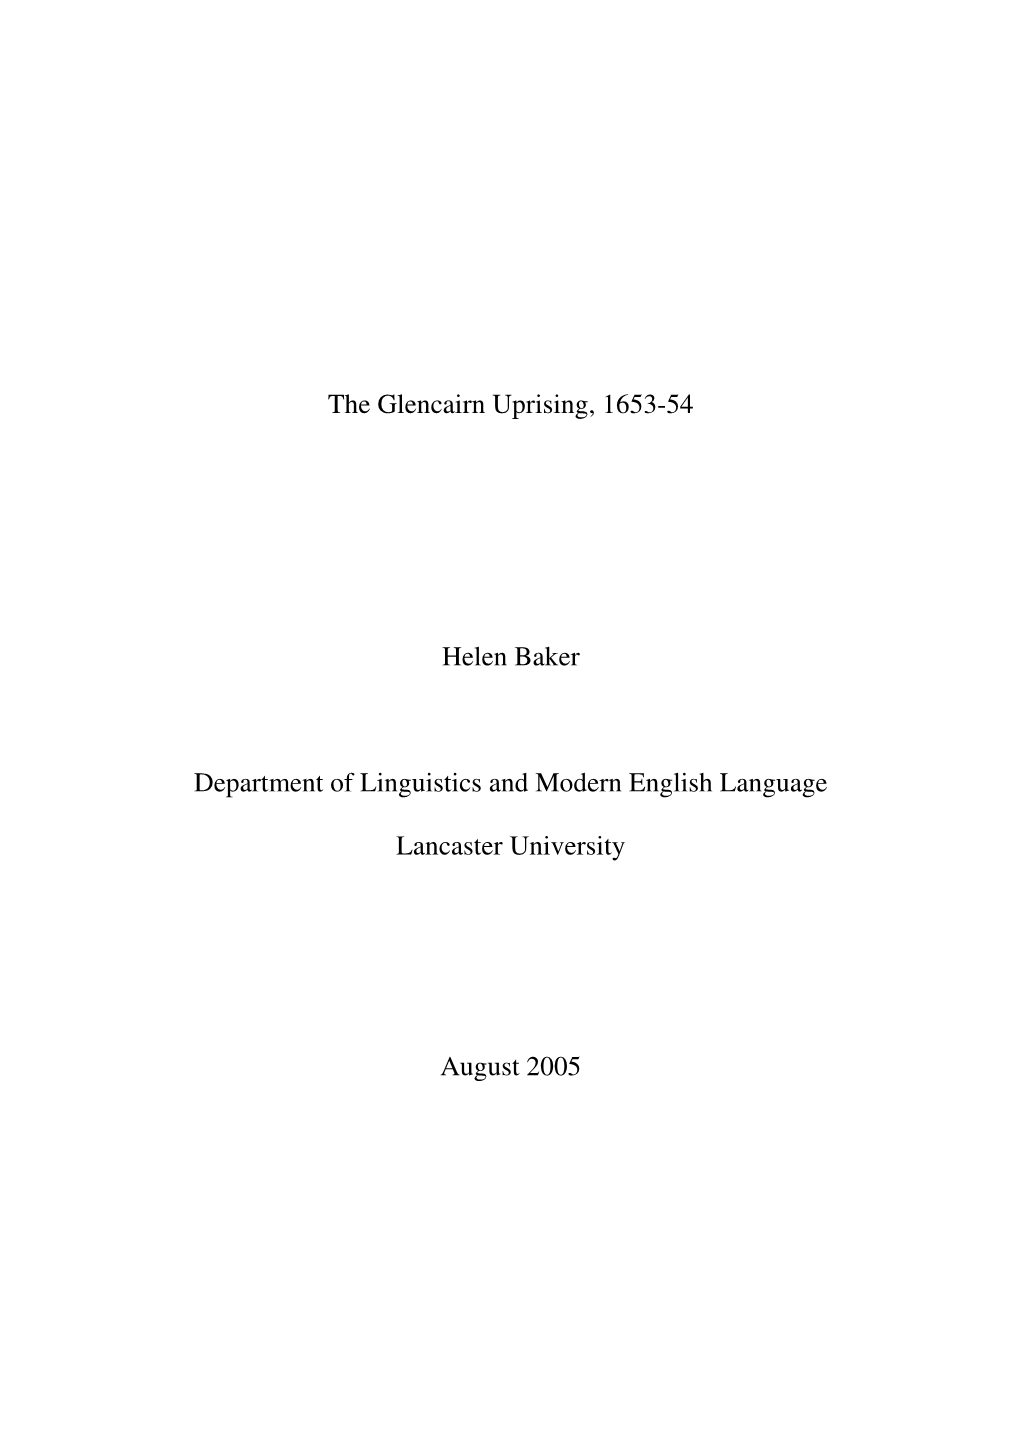 The Glencairn Uprising, 1653-54 Helen Baker Department of Linguistics and Modern English Language Lancaster University August 20